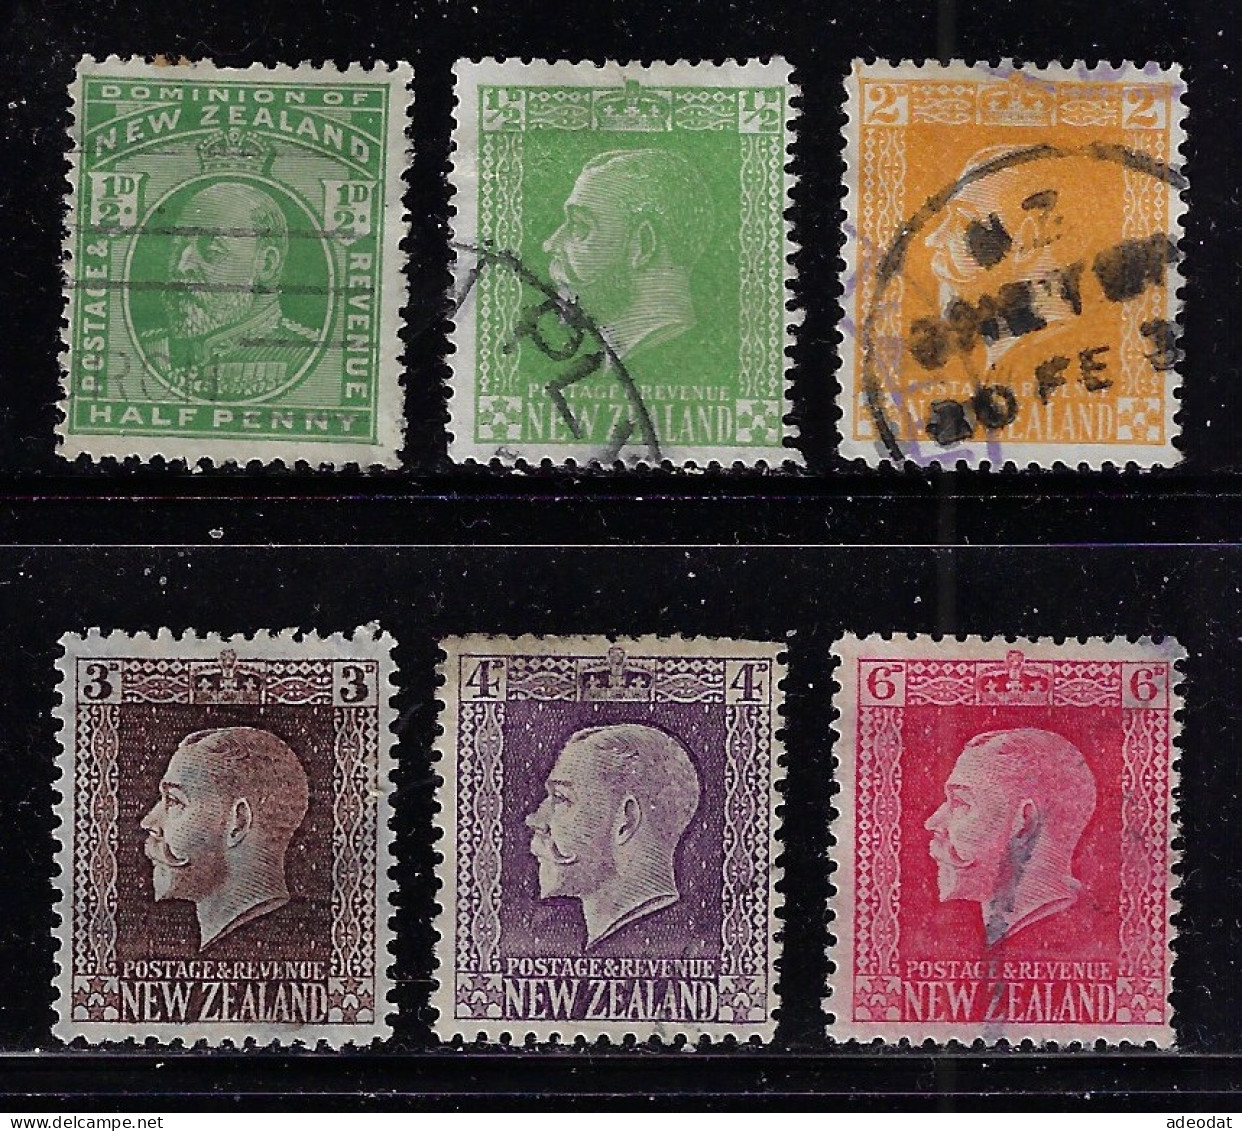 NEW ZEALAND 1909-1922 EDWARD VII, GE0RGE V  SCOTT #130,144,147,149,151,154  USED  CV - Used Stamps